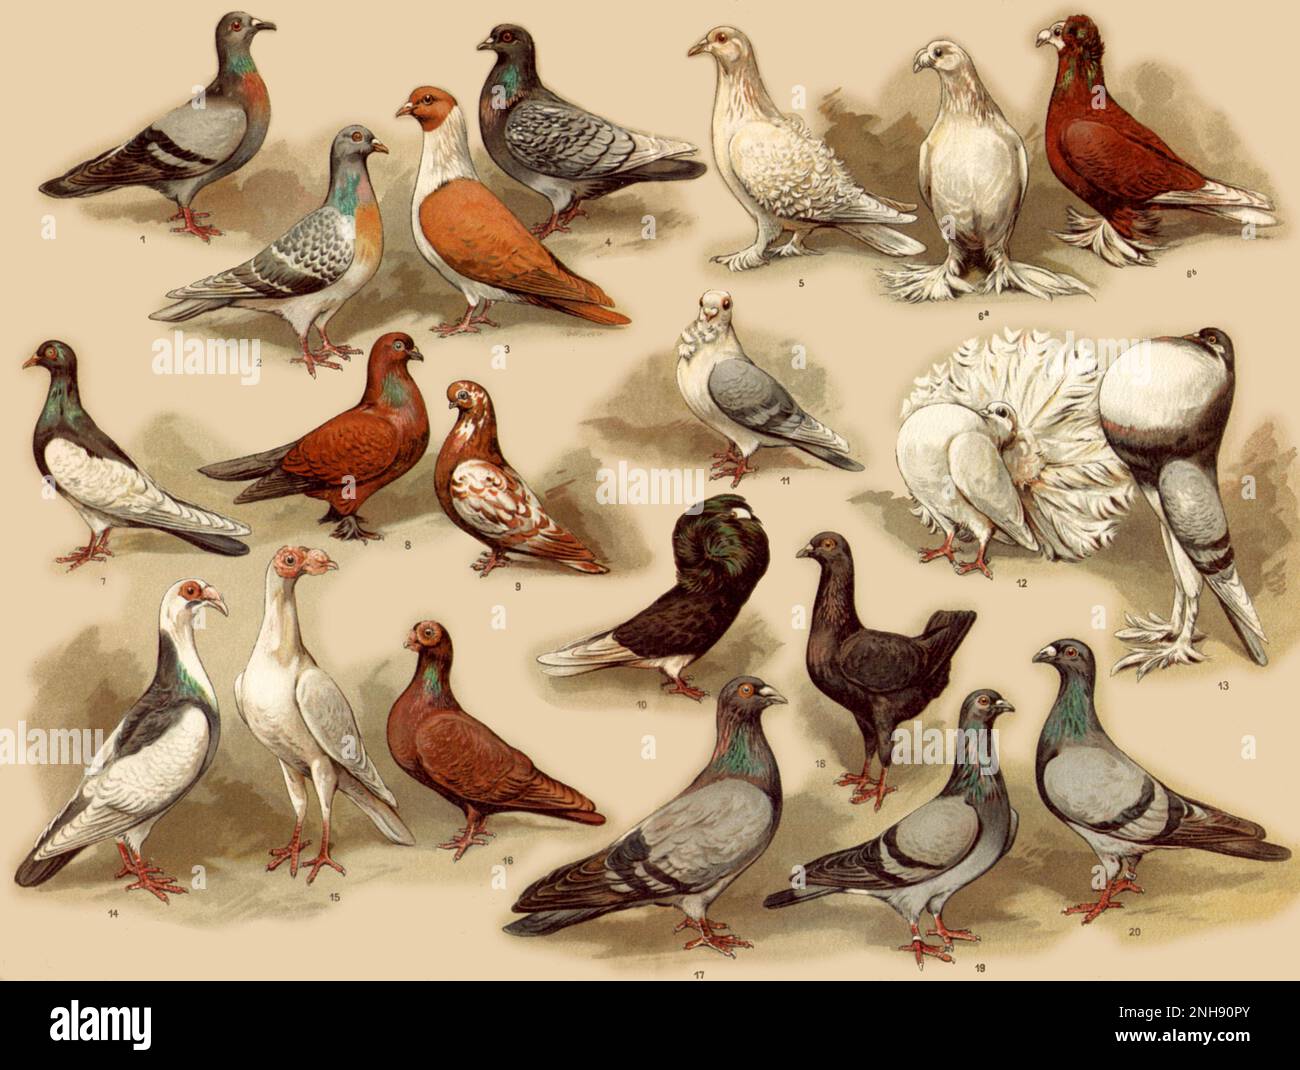 Domestic pigeons. Illustration by Karl Wagner (1864,Ai1939), 1909. 1. Rock dove. ,Ai 2. Coburg Lark. ,Ai 3. Strasser. ,Ai 4. Lynx. ,Ai 5. Frillback. ,Ai 6a. Saxon Drum. ,Ai 6b. German Drum. ,Ai 7. Long-billed Tumbler. ,Ai 8. Middle-billed Tumbler. ,Ai 9. Short-billed Tumbler. ,Ai 10. Nun. ,Ai 11. Anatolian Turbit. ,Ai 12. Fantail. ,Ai 13. English Pouter. ,Ai 14. Nuremberg Bagdad. ,Ai 15. Carrier. ,Ai 16. German Barb. ,Ai 17. Roman. ,Ai 18. Maltese. ,Ai 19. Antwerp Carrier. ,Ai 20. Show Pigeon. Stock Photo